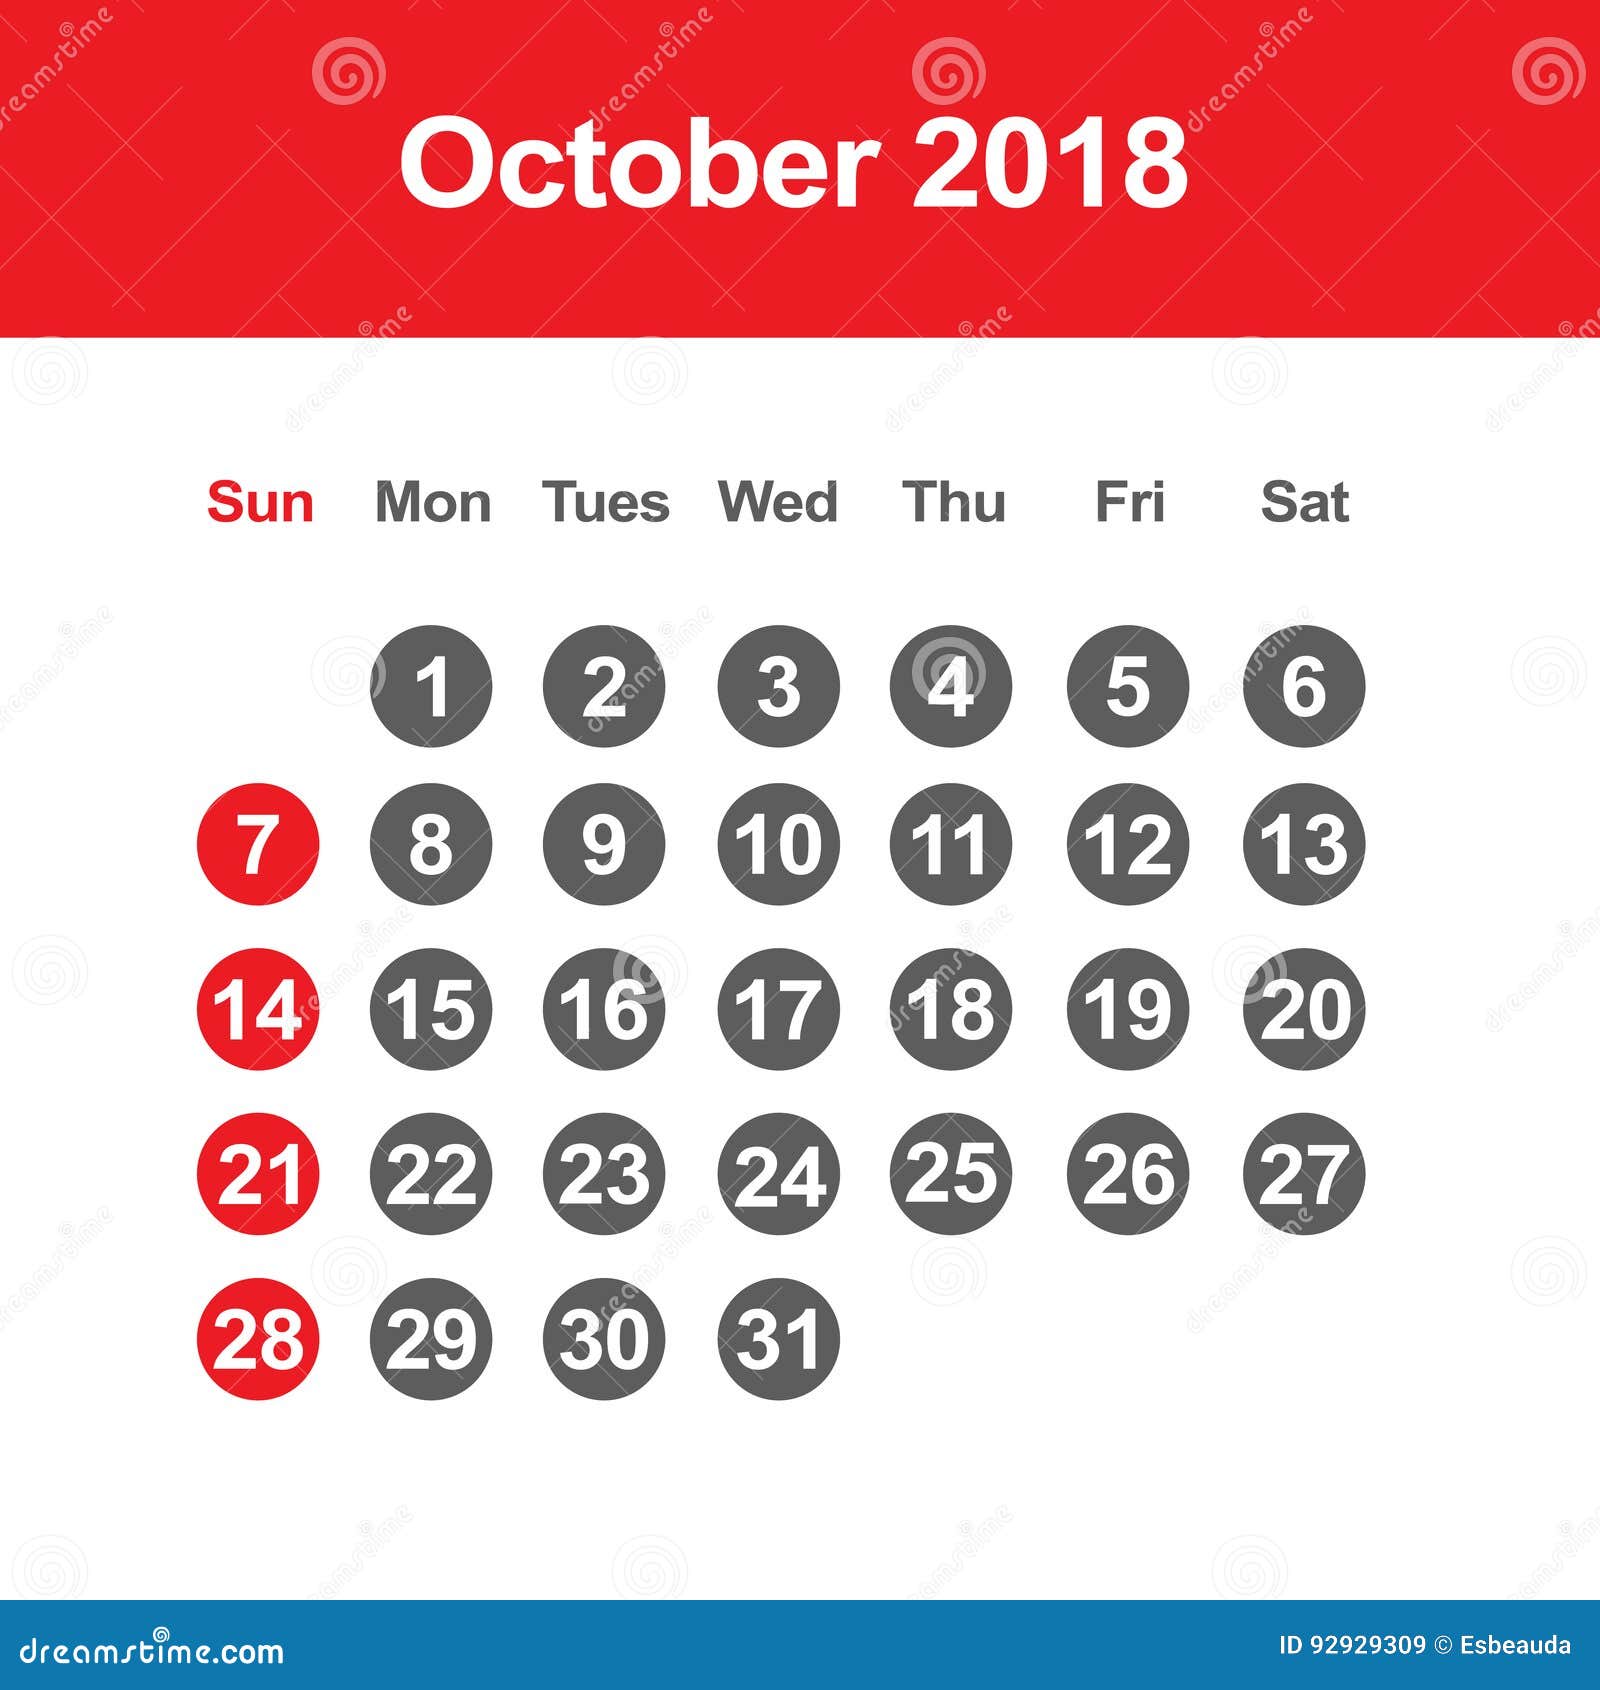 pin-on-october-2018-calendar-printable